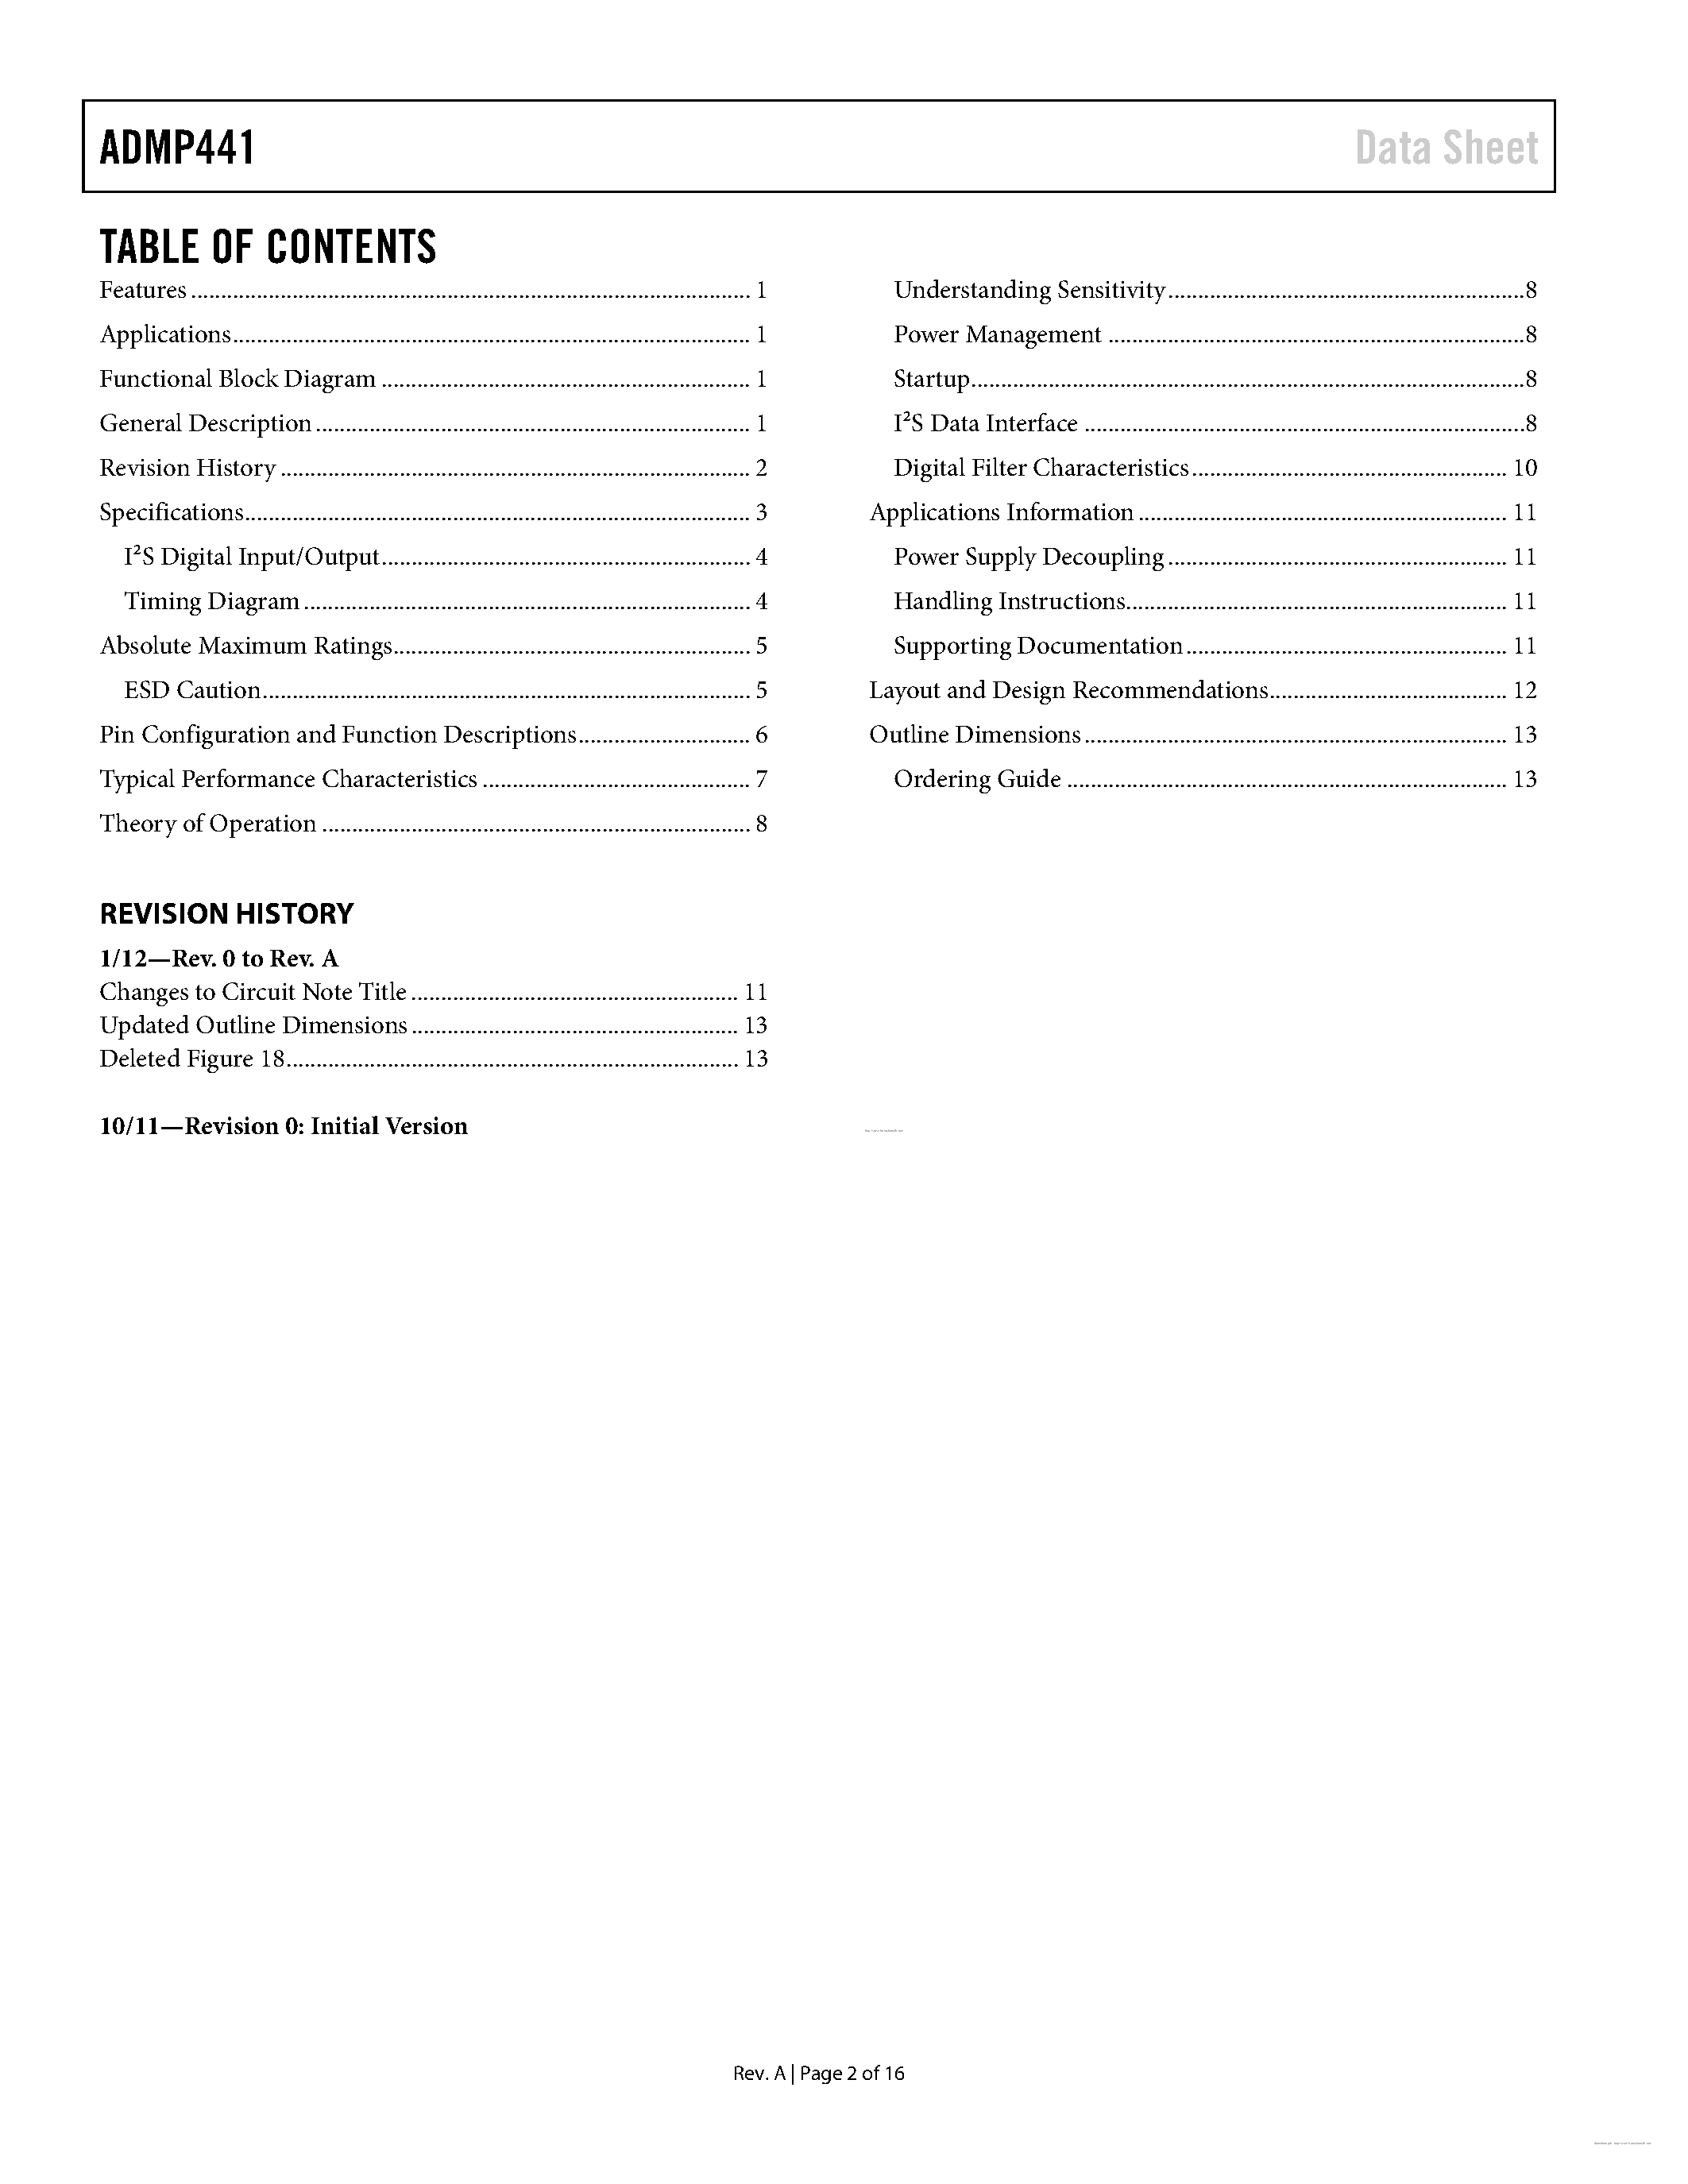 Datasheet ADMP441 - page 2